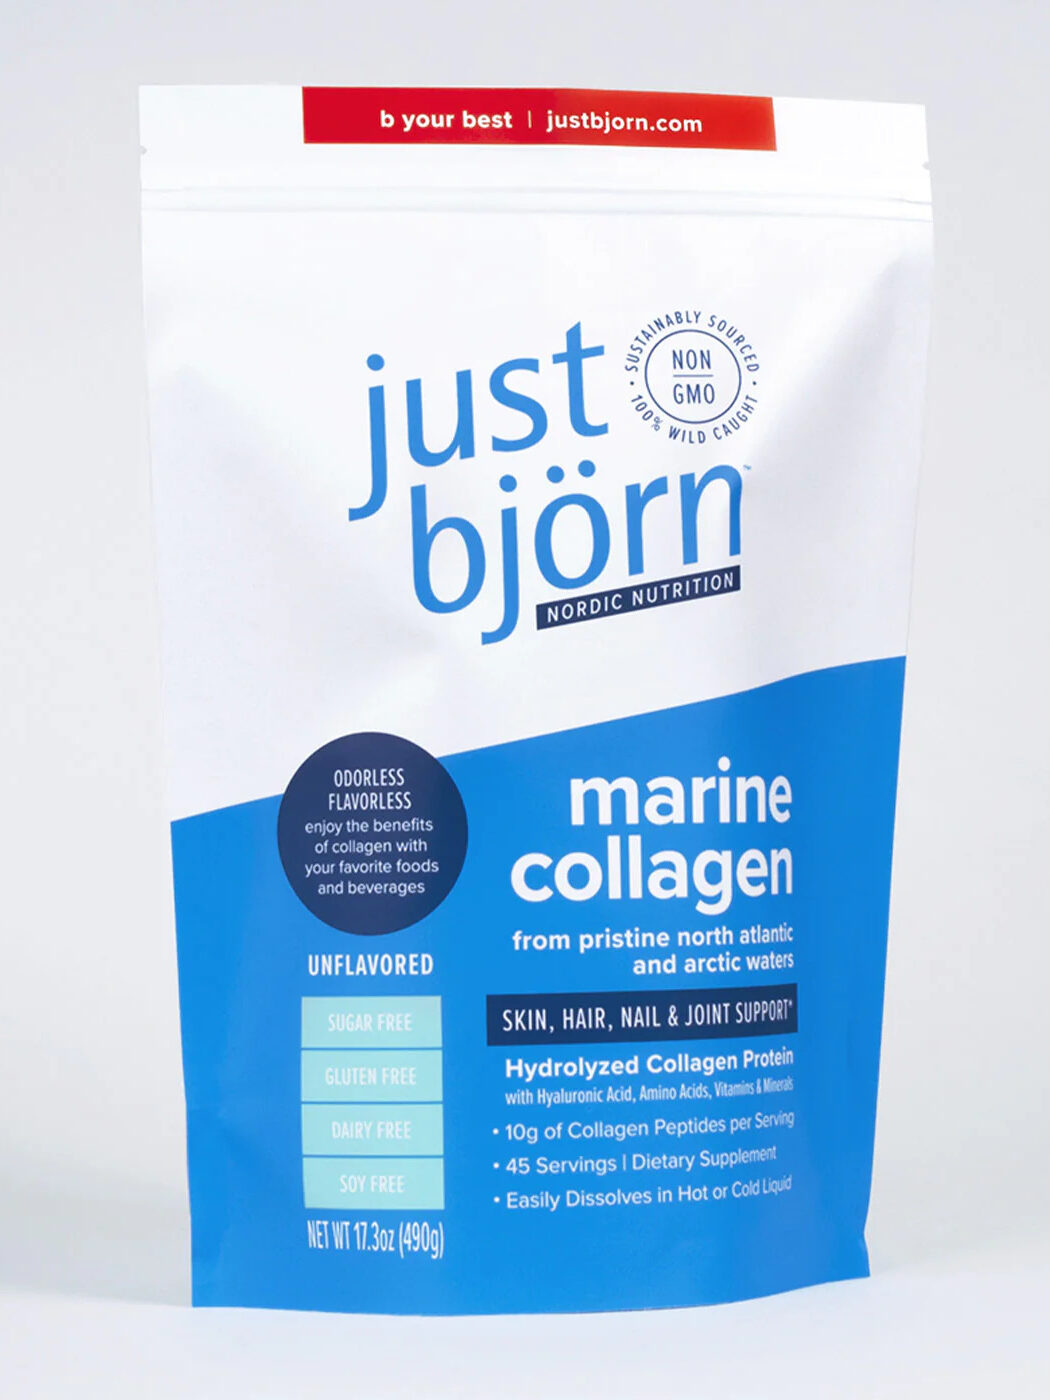 A packet of just björn marine collagen.